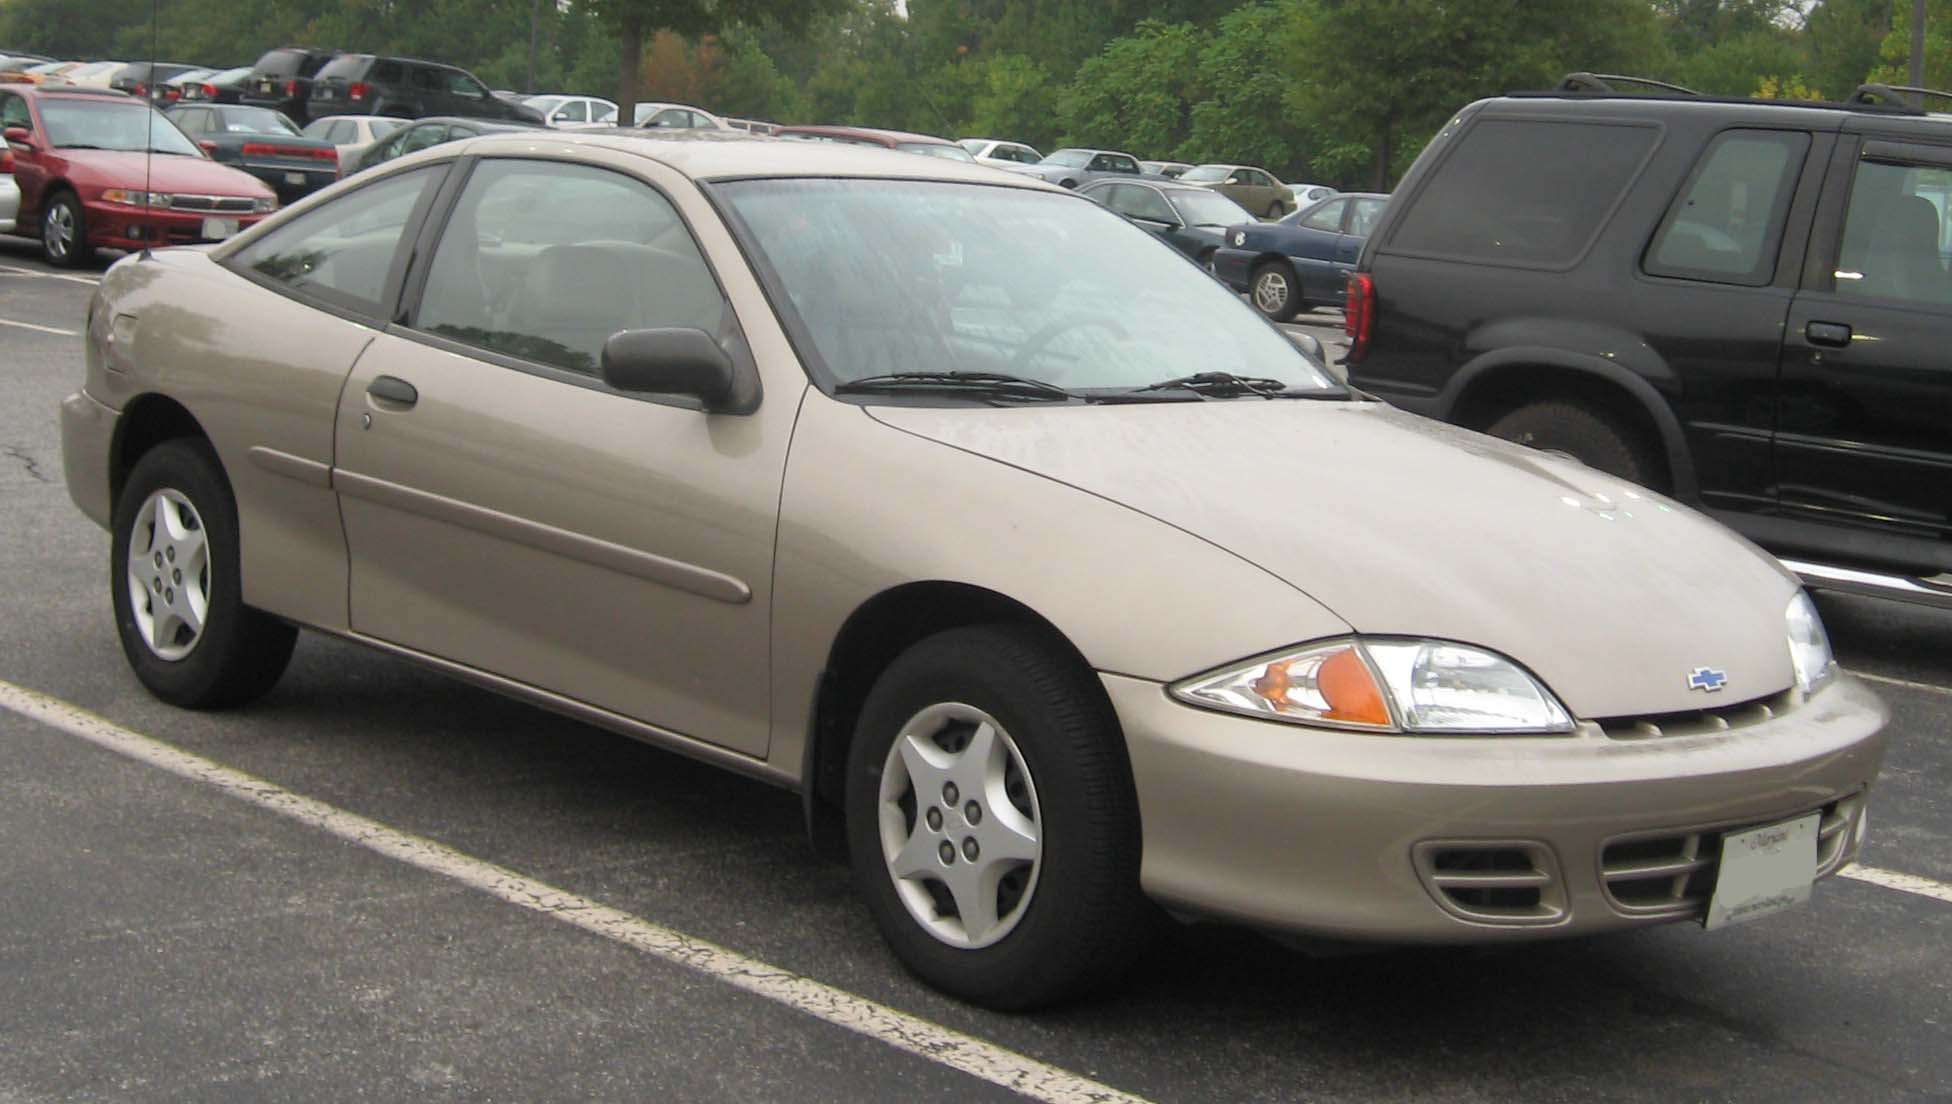  2000-2002 Chevrolet Cavalier coupe 